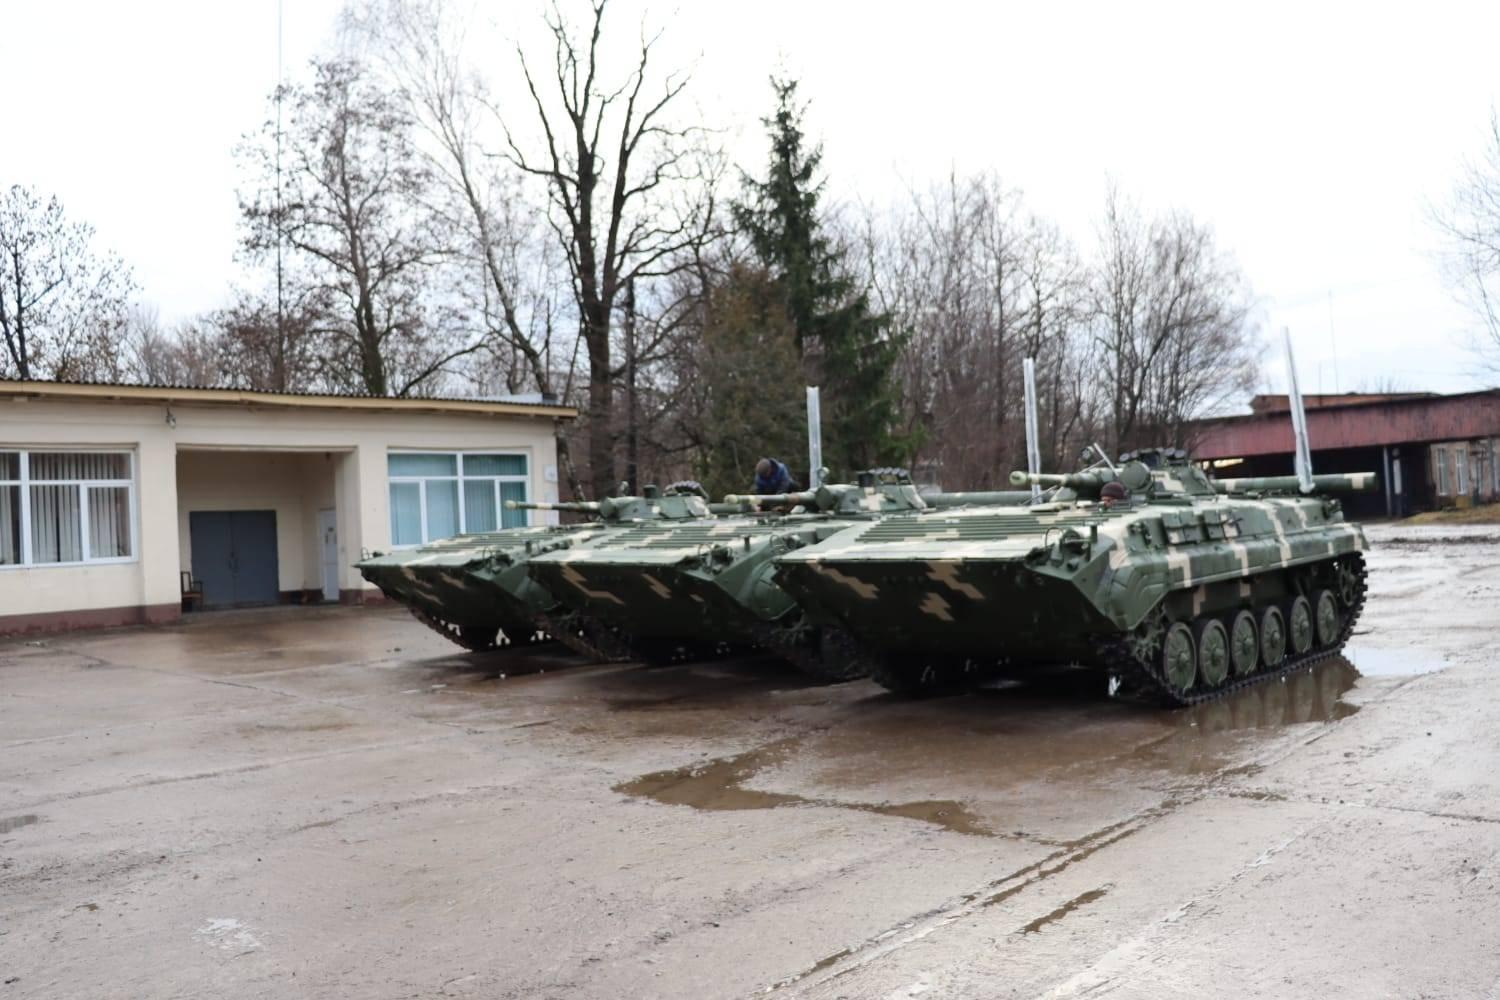 Ukrainian Company Lviv Armored Plant Repairs Batch of BMP-1 Infantry Fighting Vehicles